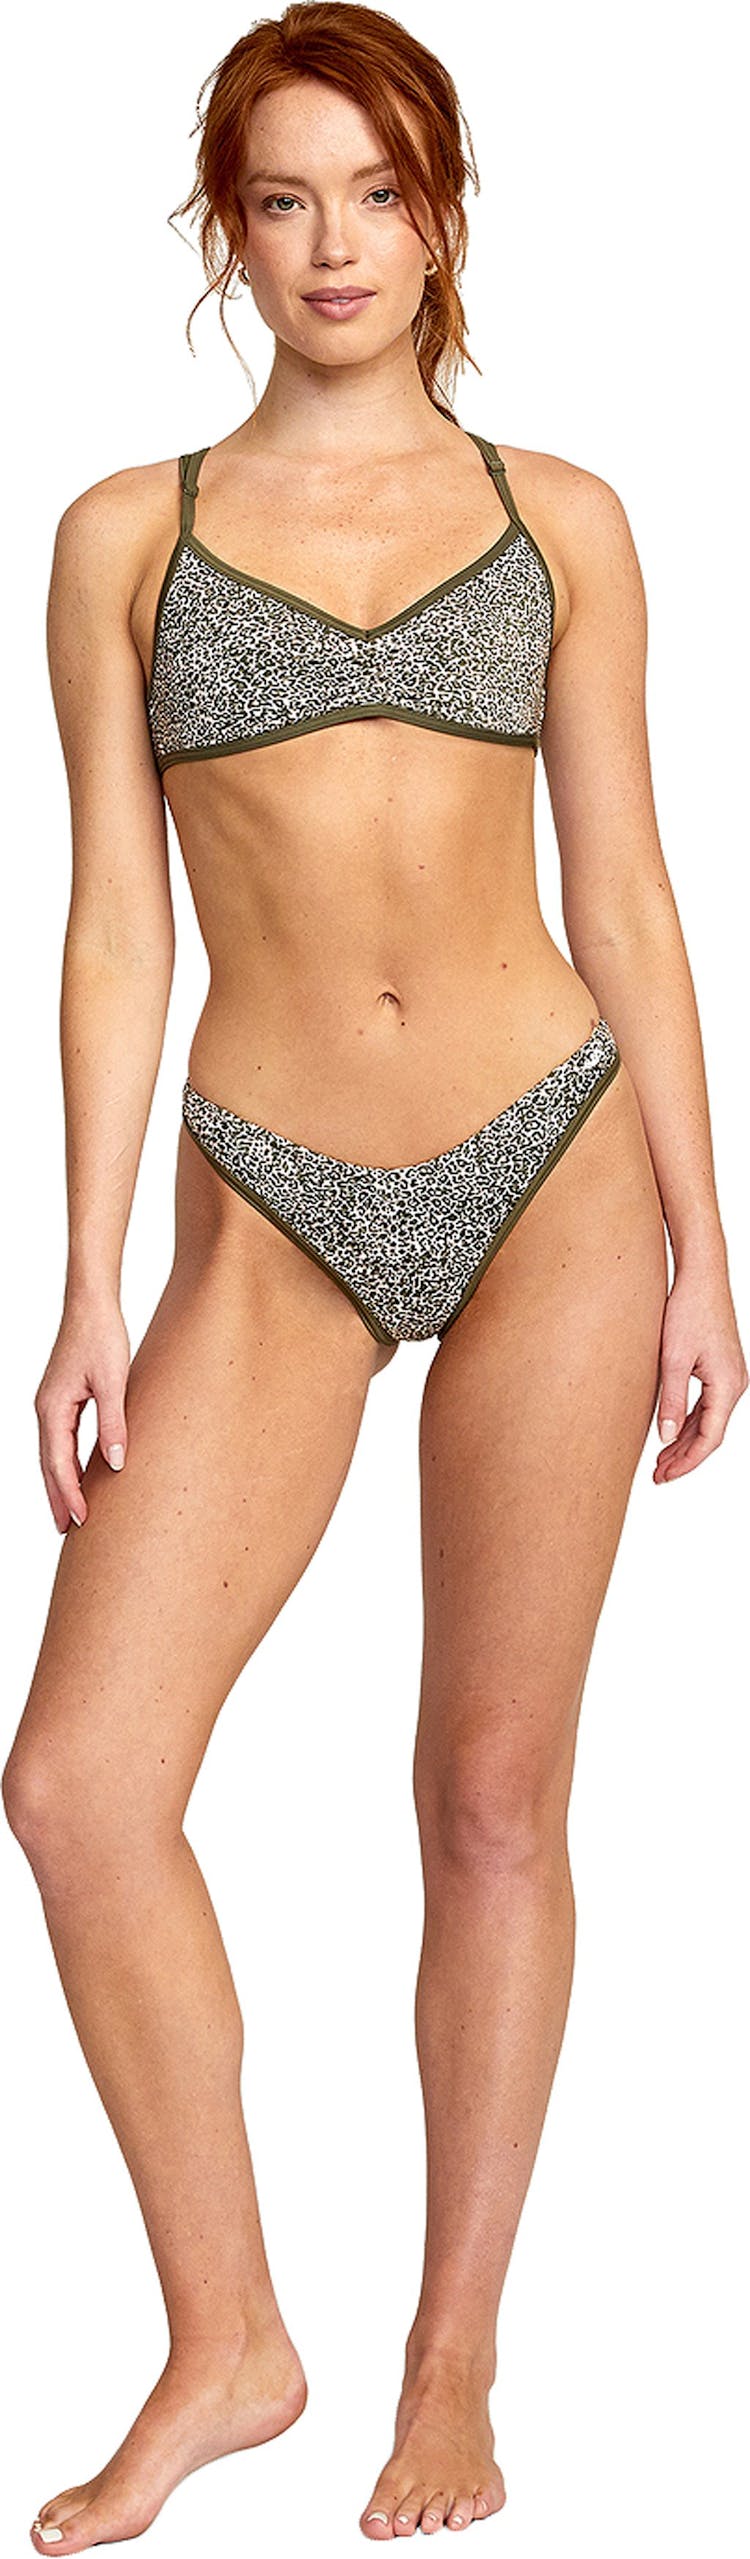 Product gallery image number 6 for product Blocked Hi Leg Bikini Bottom - Women's